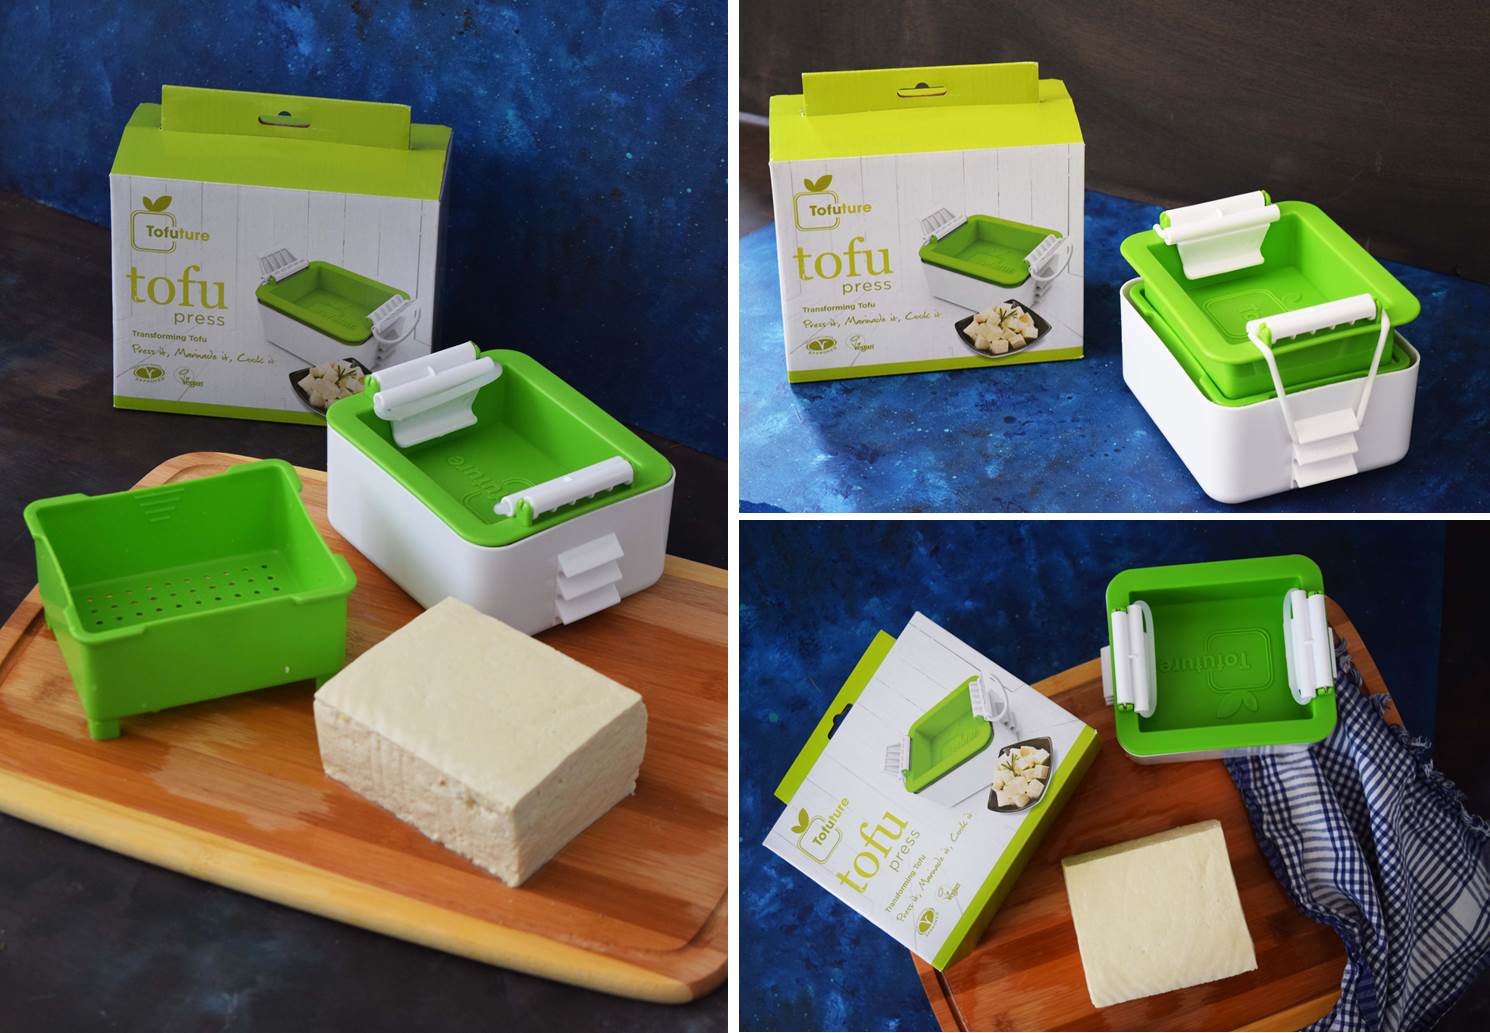 Tofu Press Tofuture's Tofu Press to transform your tofu